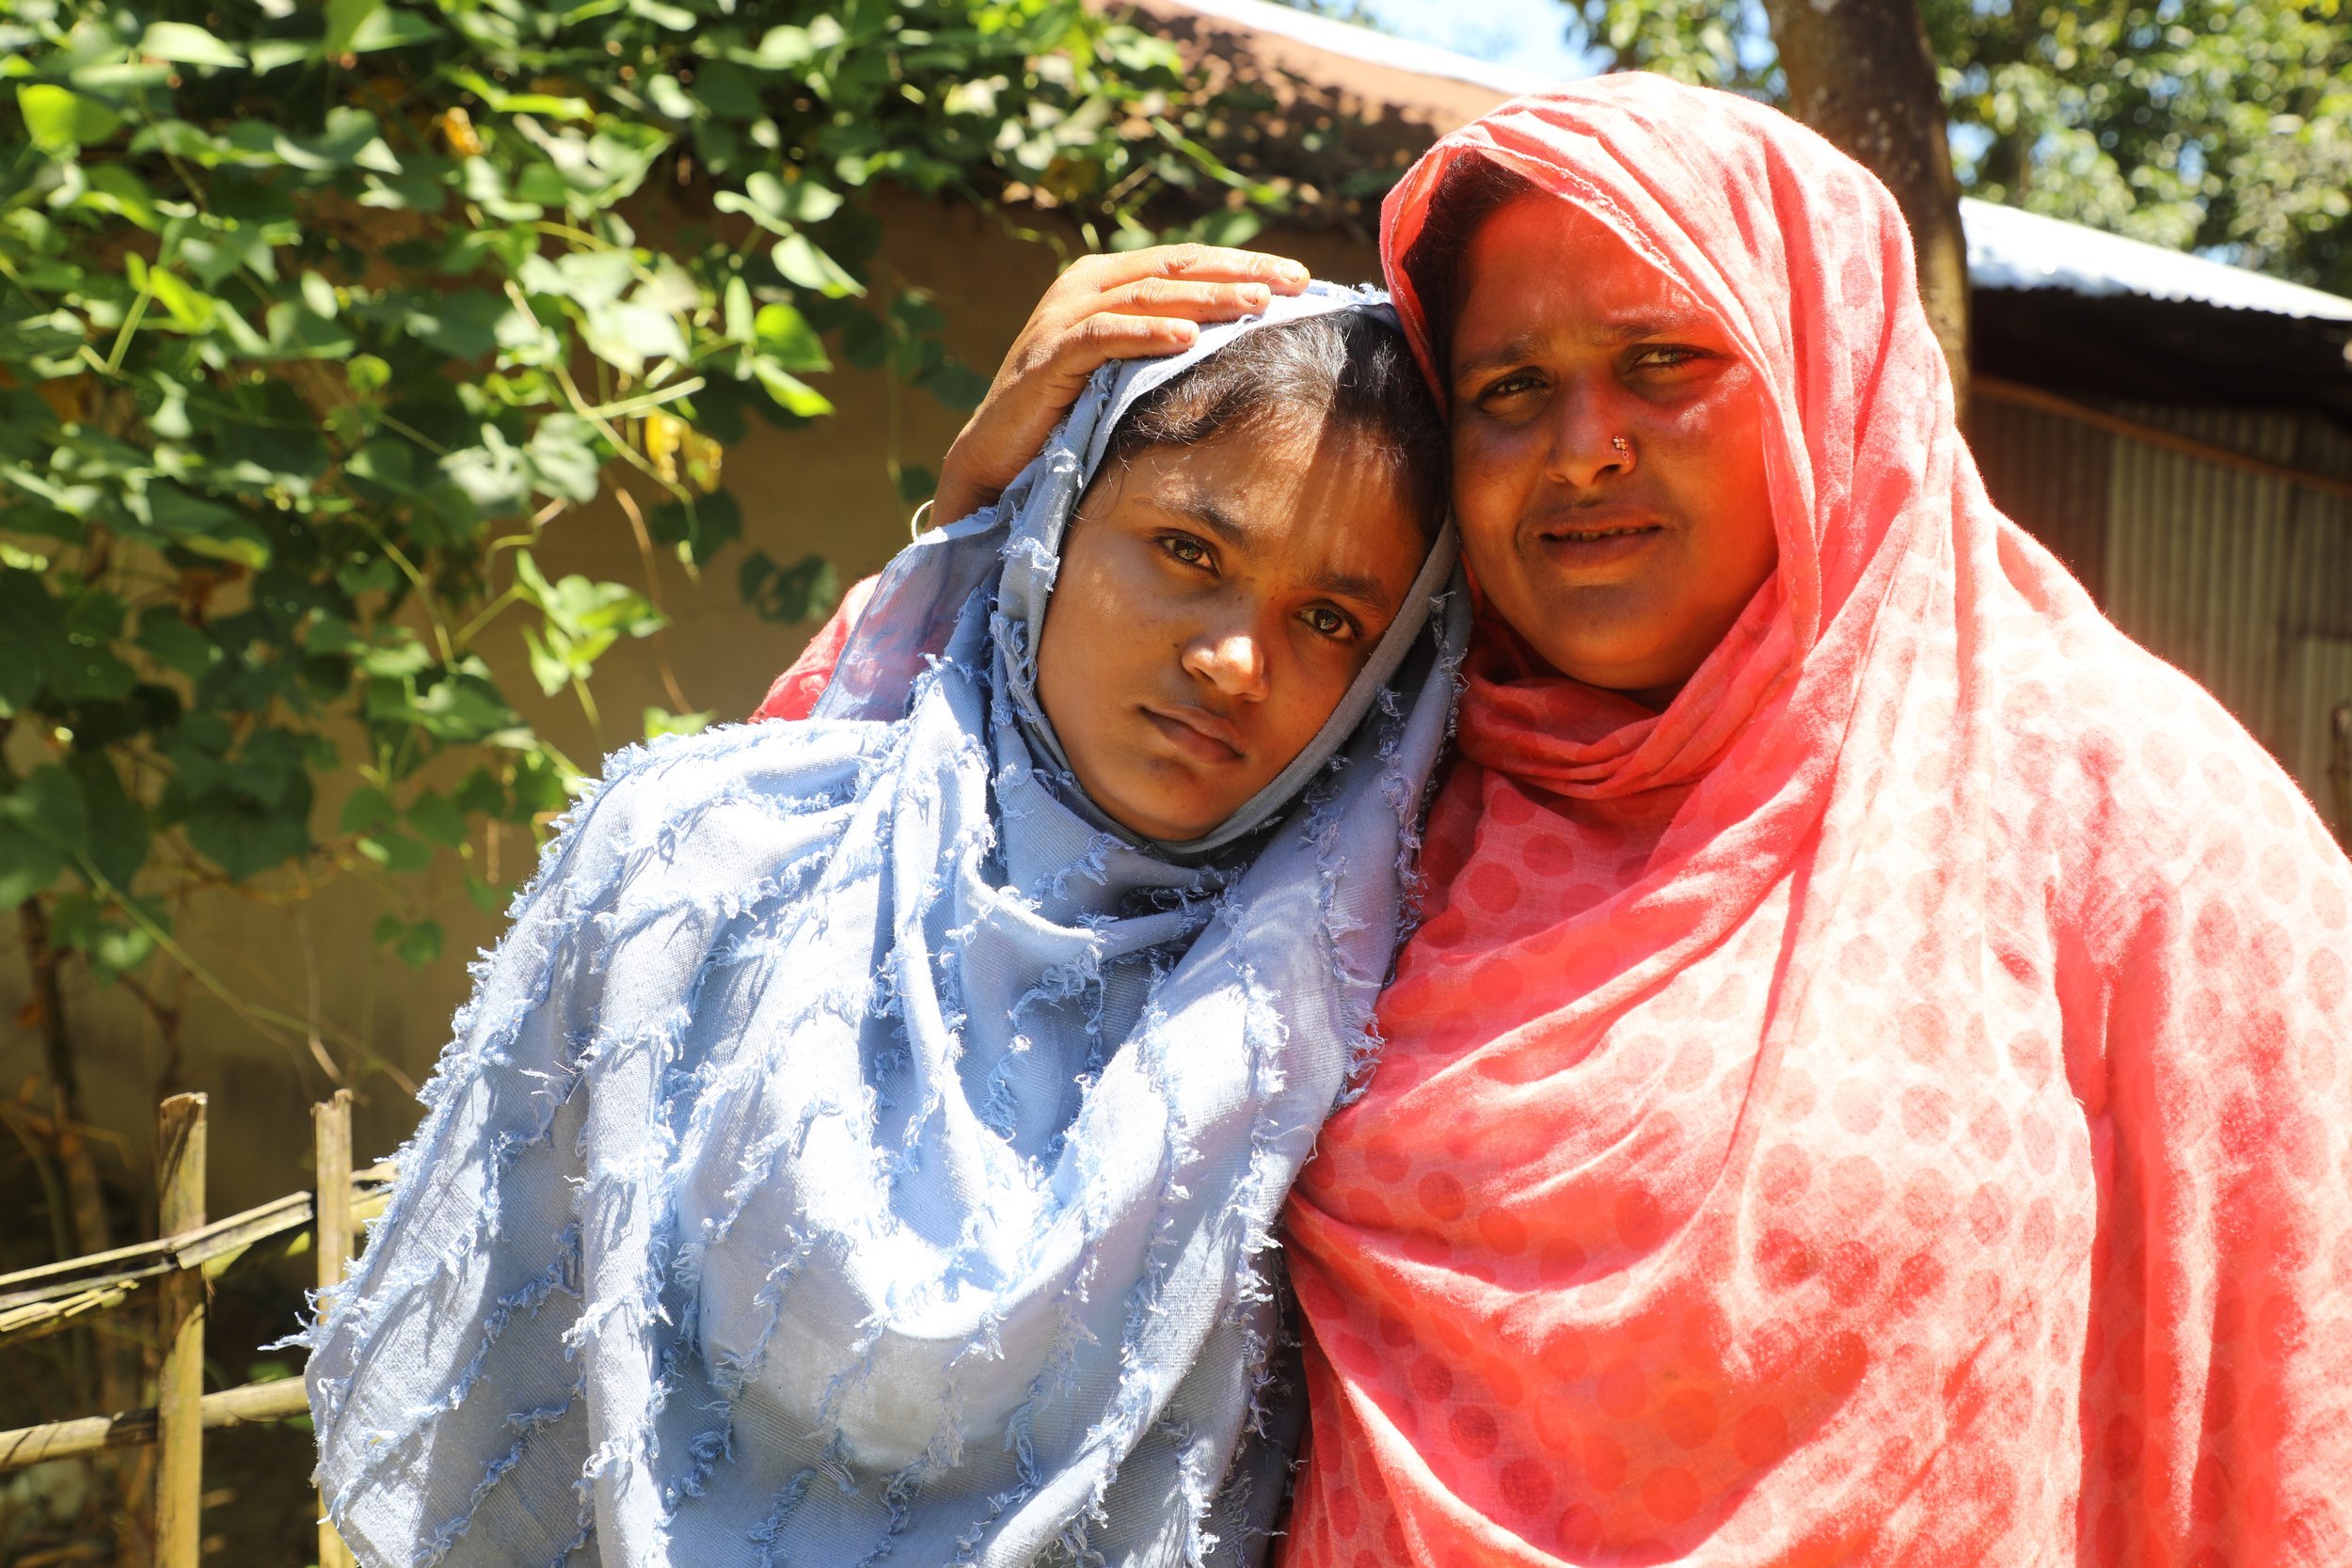  Above: Rifa with her mother Khurshida. Photo: Md. Qazi Shamim Hasan, World Vision Bangladesh 